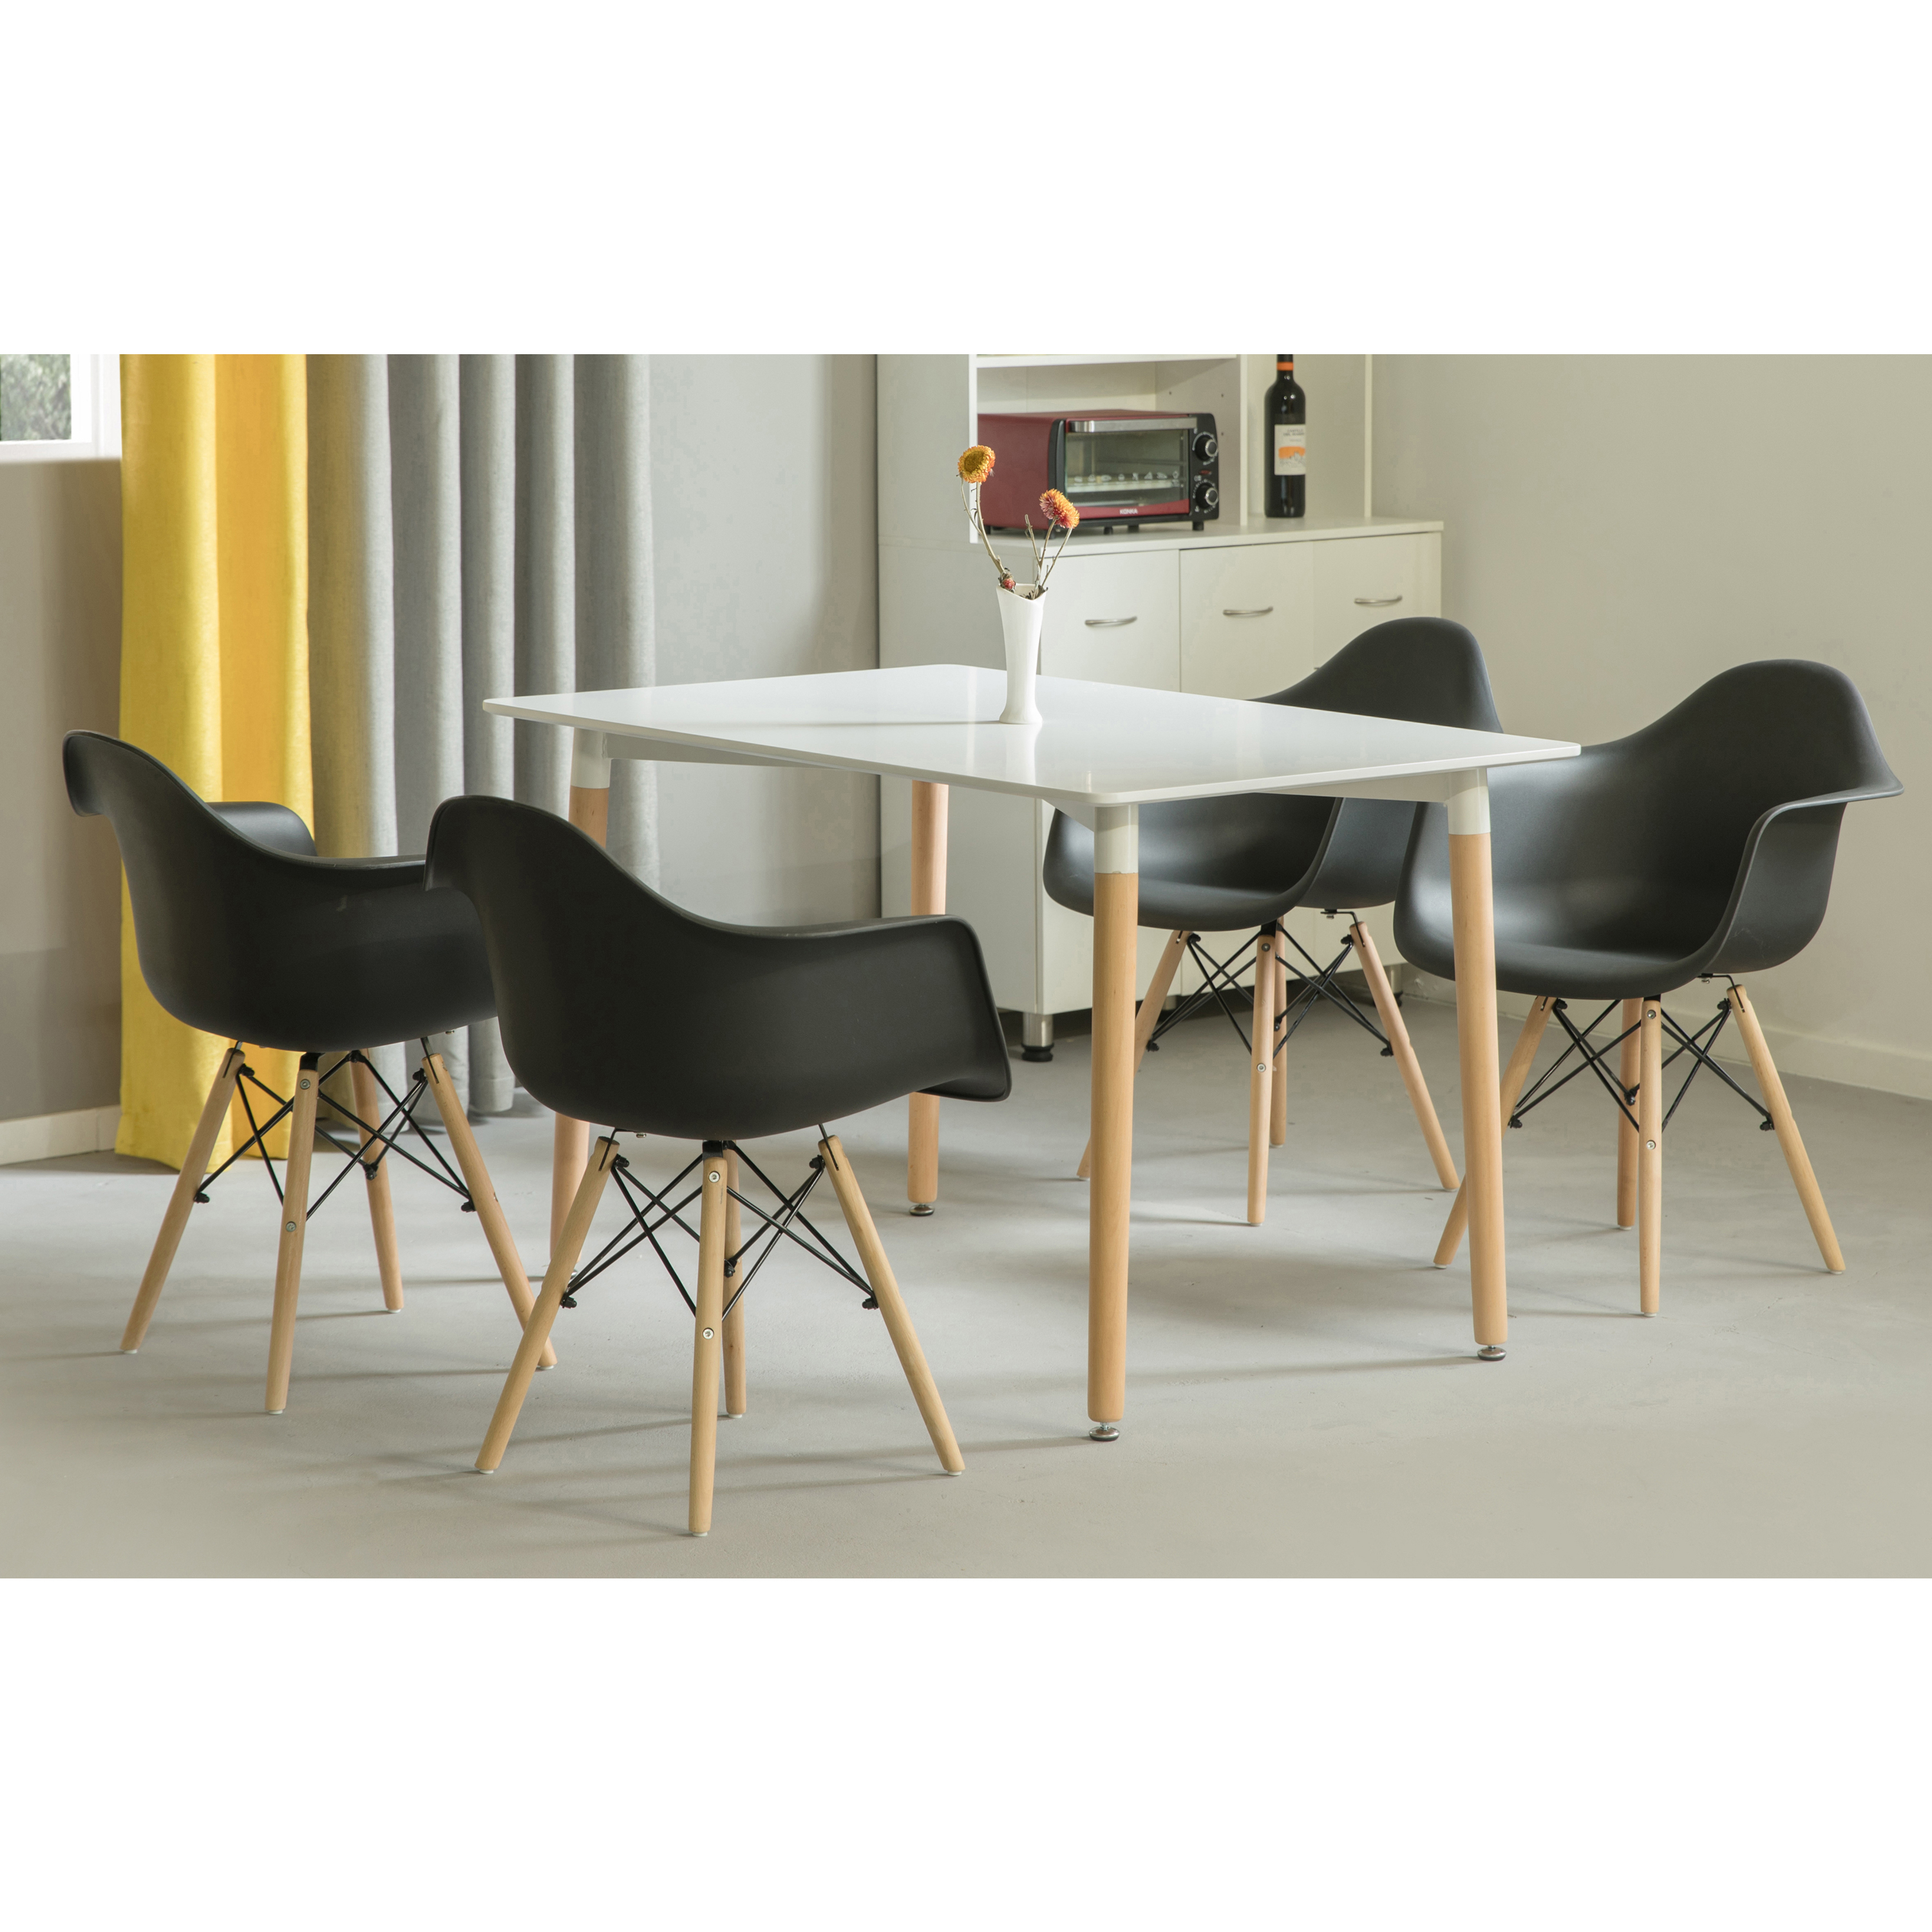 Mid-Century Modern Style Plastic DAW Shell Dining Arm Chair With Wooden Dowel Eiffel Legs - Set Of 4 Black